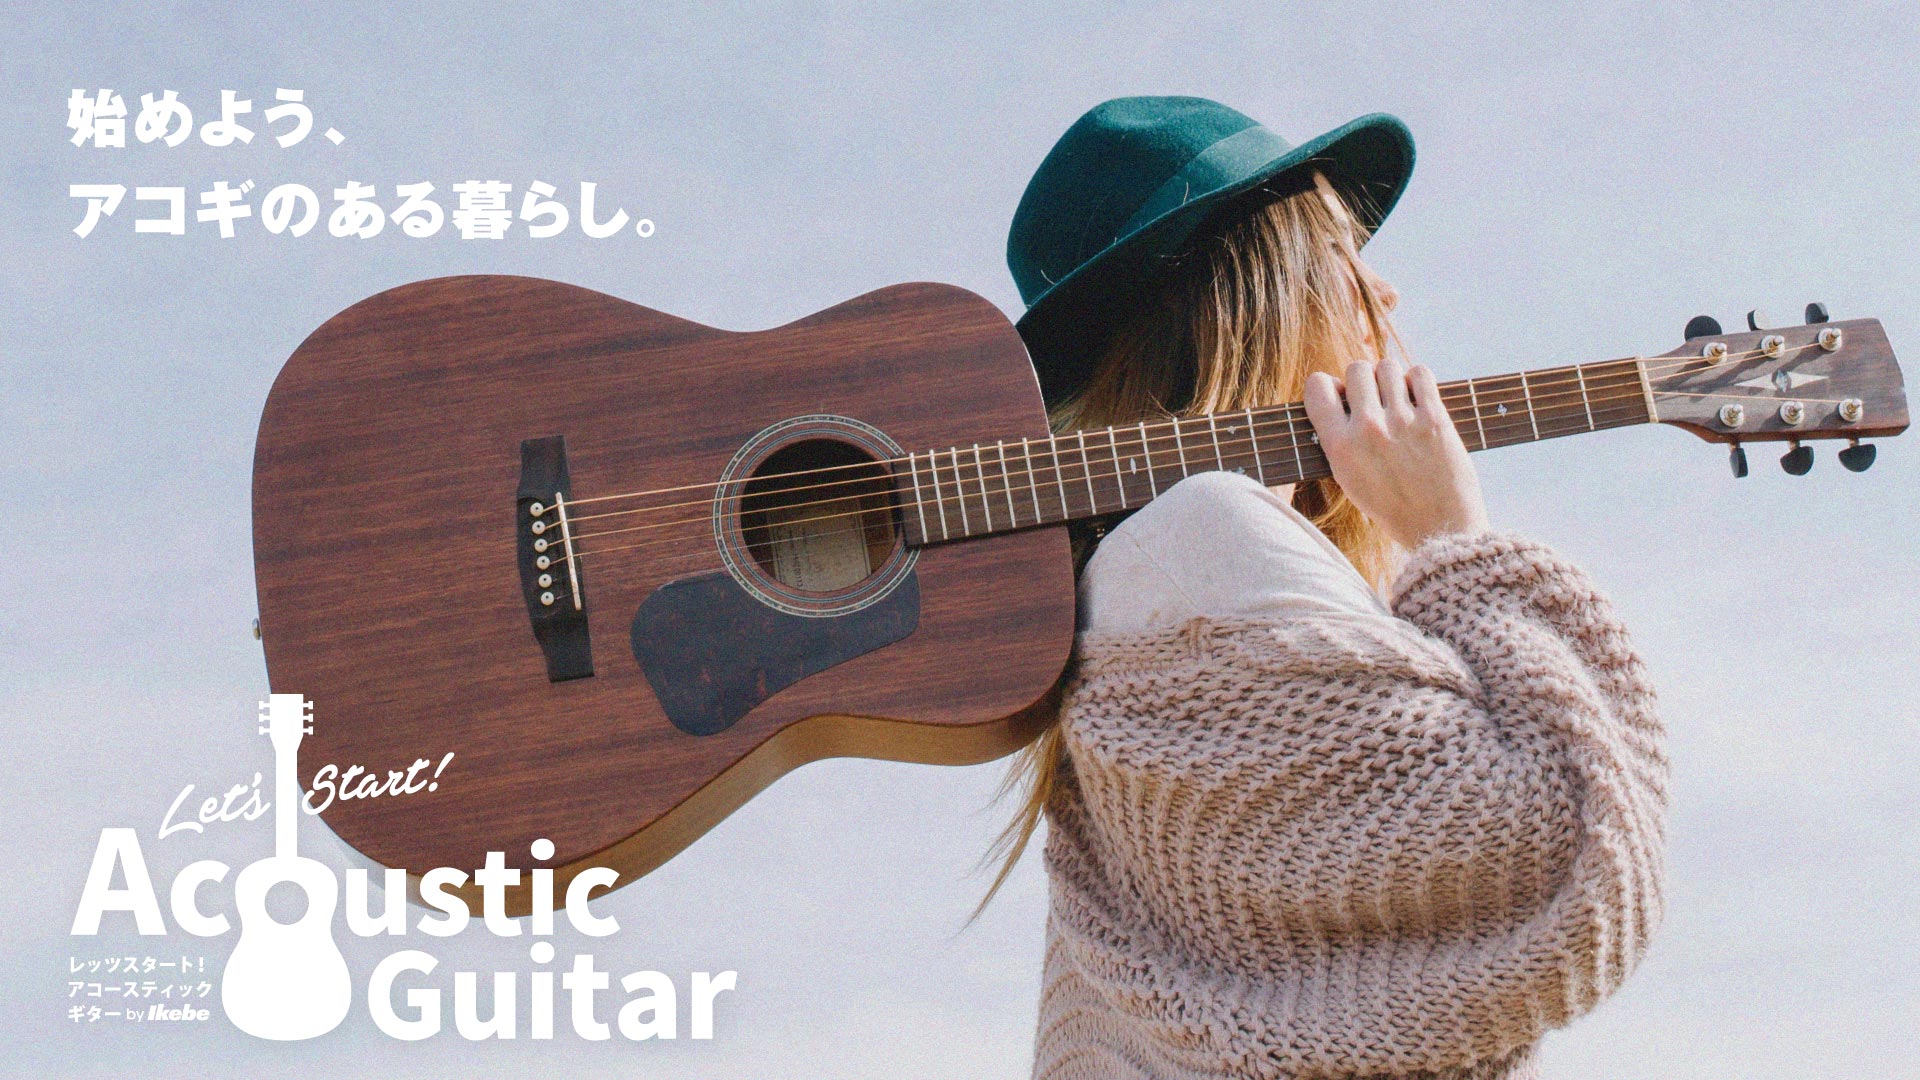 Let's Start！Acoustic guitar